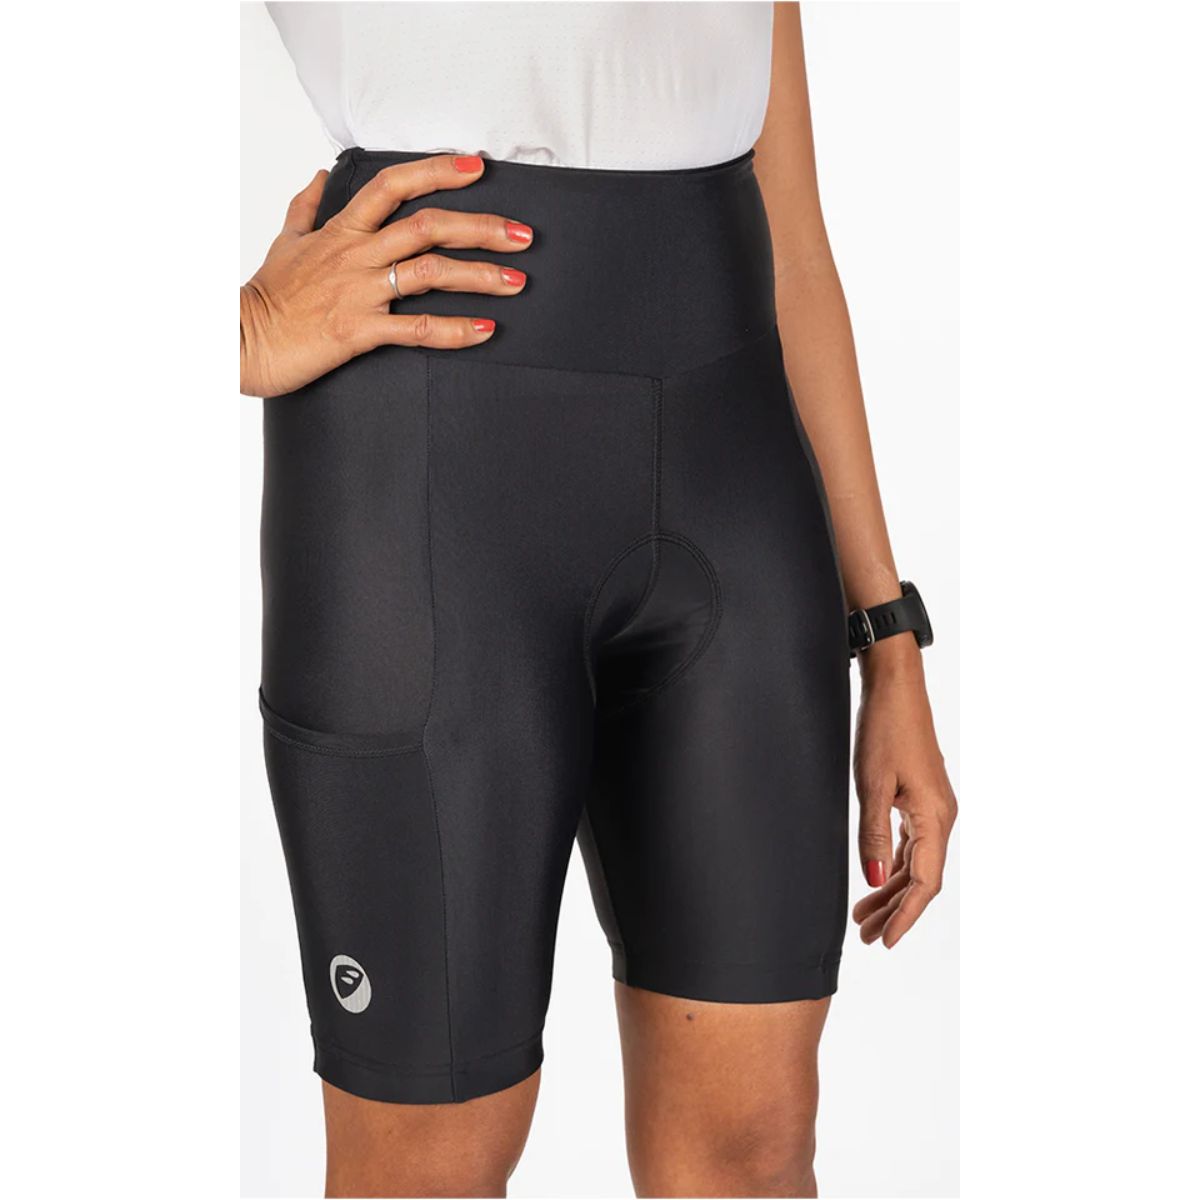 Womens Cycling Shorts - Padded Shorts - Evolve - Black 3